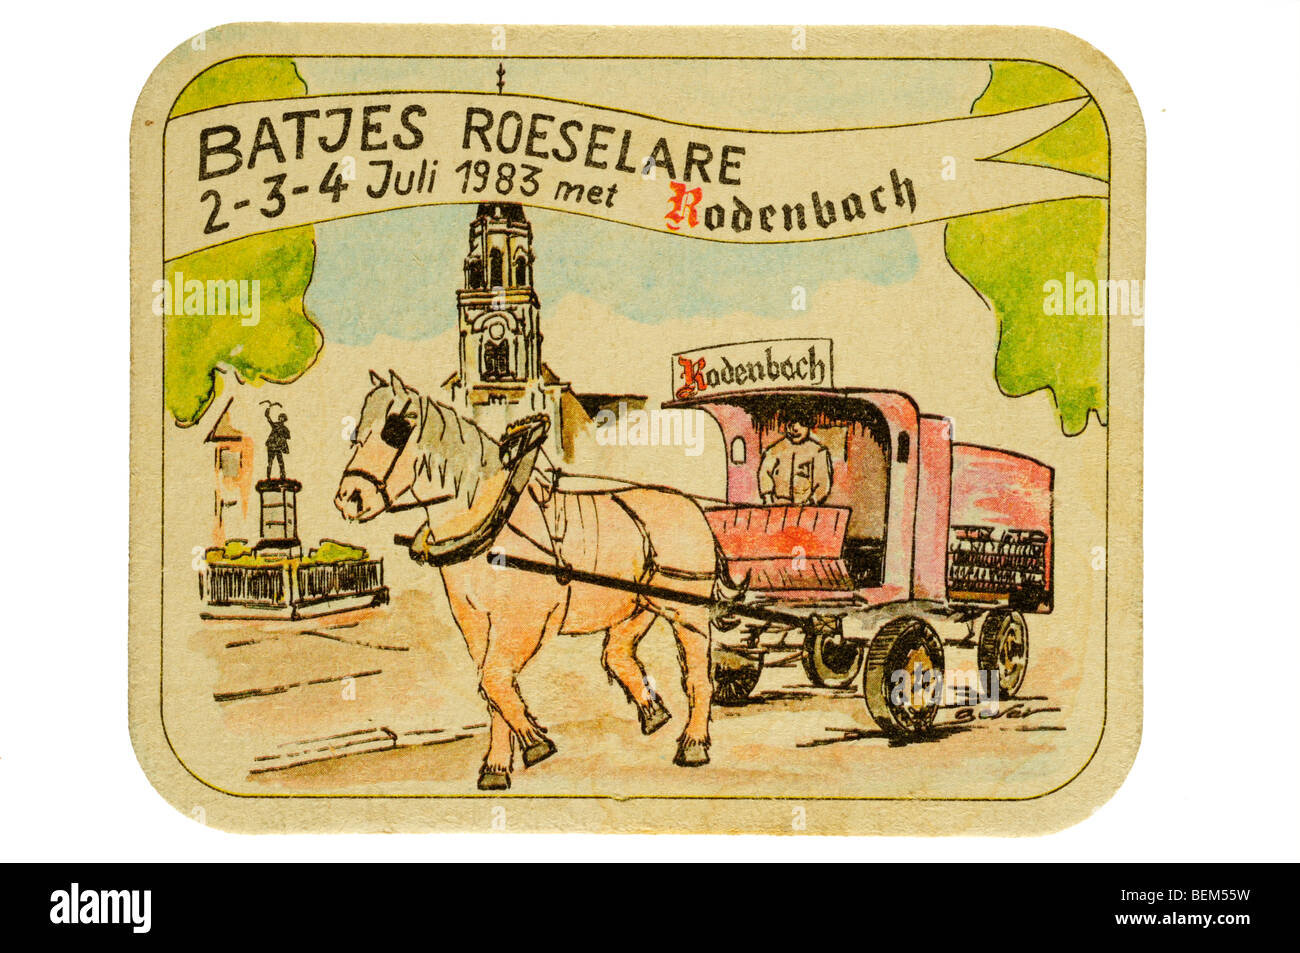 Batjes Roeselare 2 3 4 Juli 1983 traf rodenbach Stockfoto